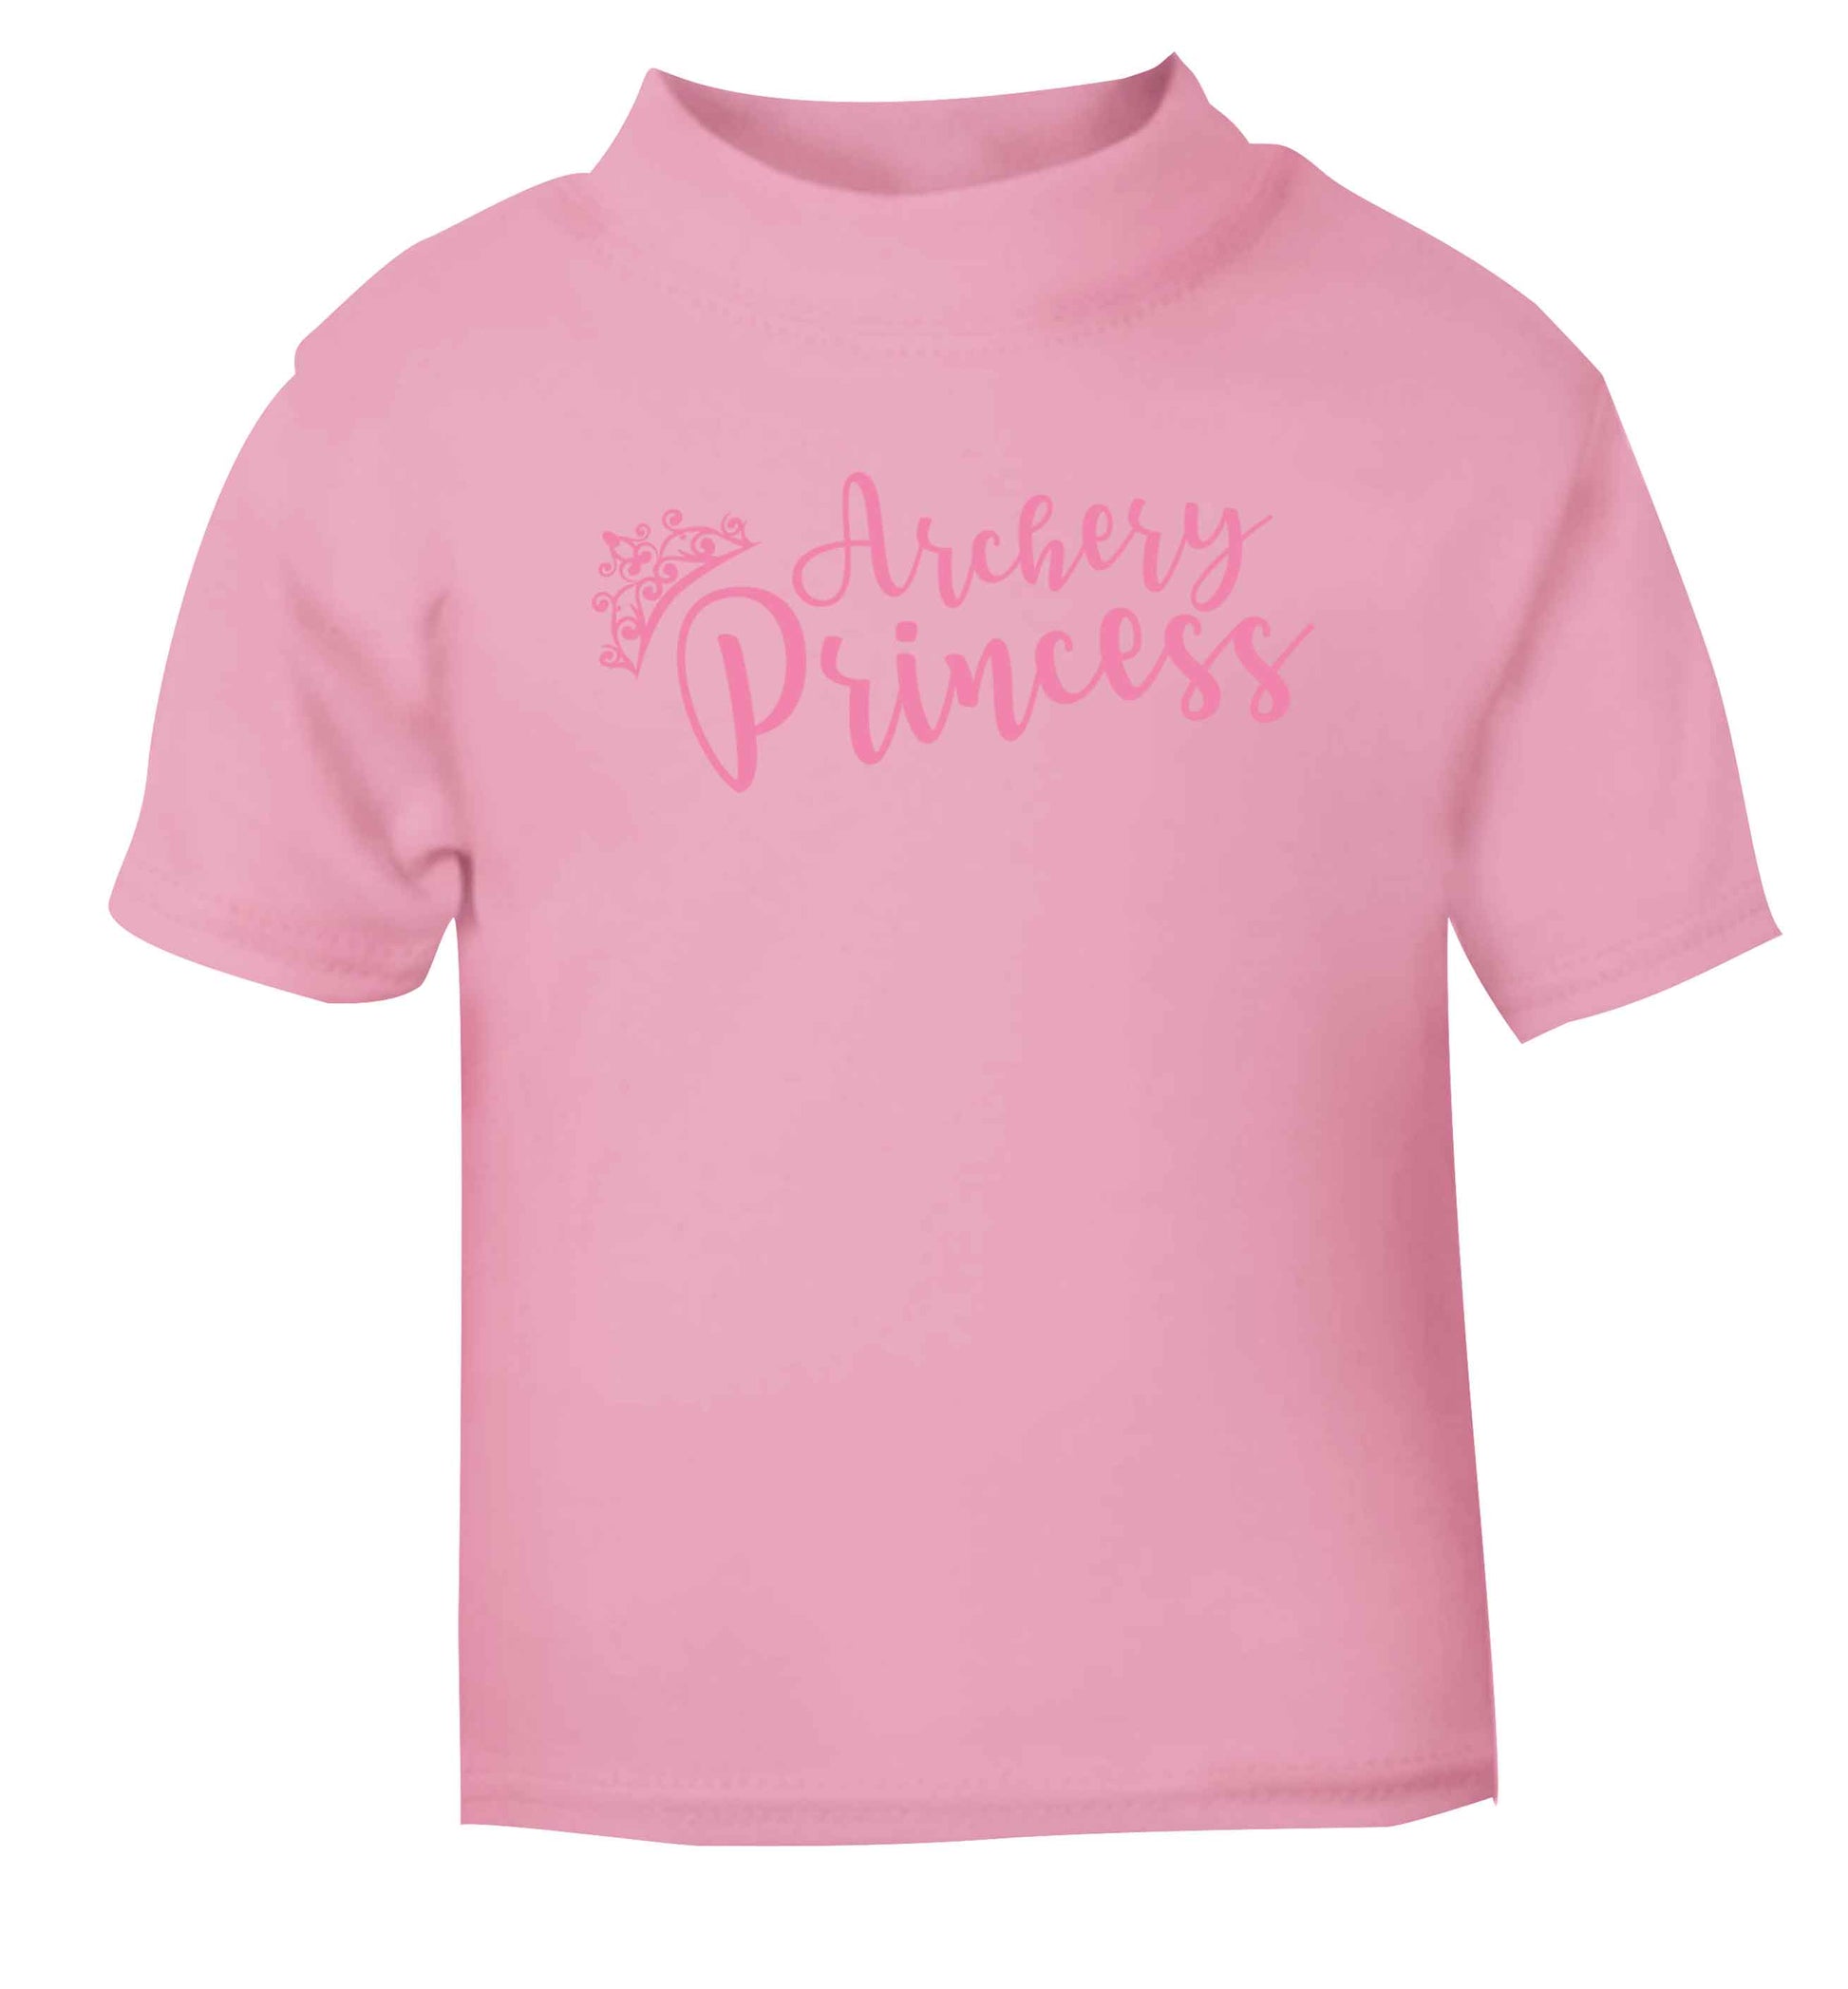 Archery princess light pink Baby Toddler Tshirt 2 Years